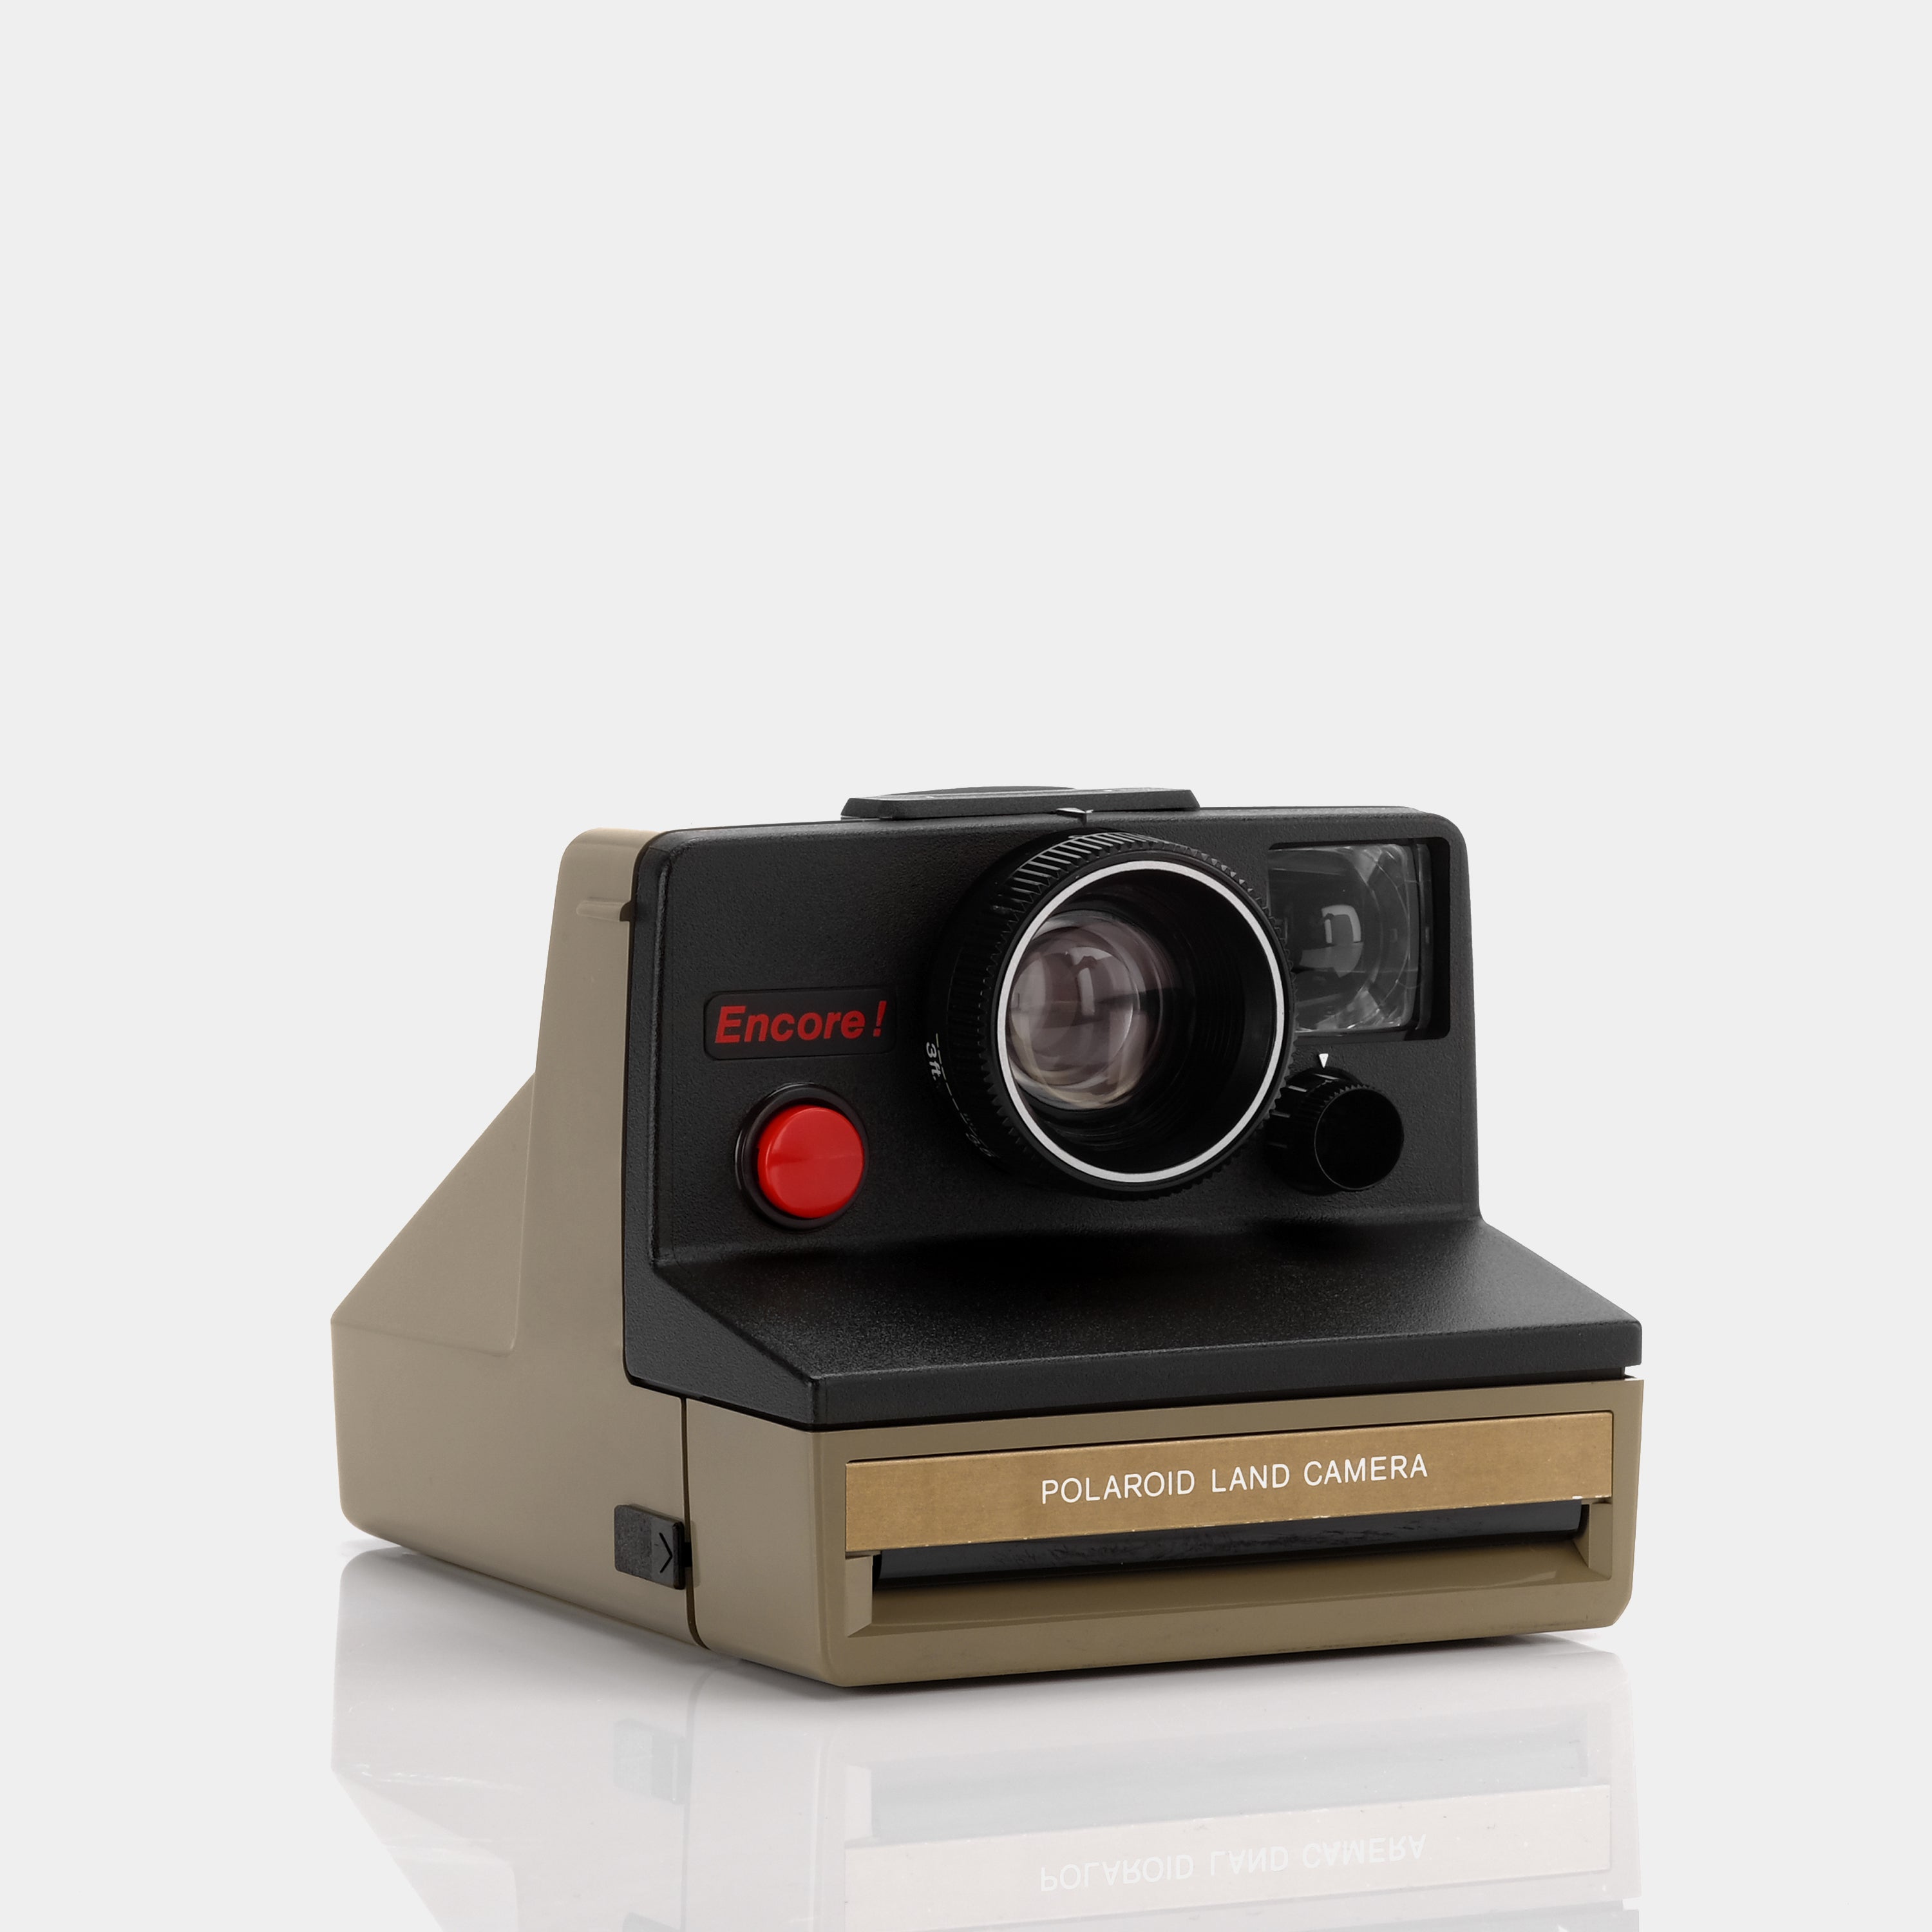 Polaroid SX-70 Encore! Instant Film Camera